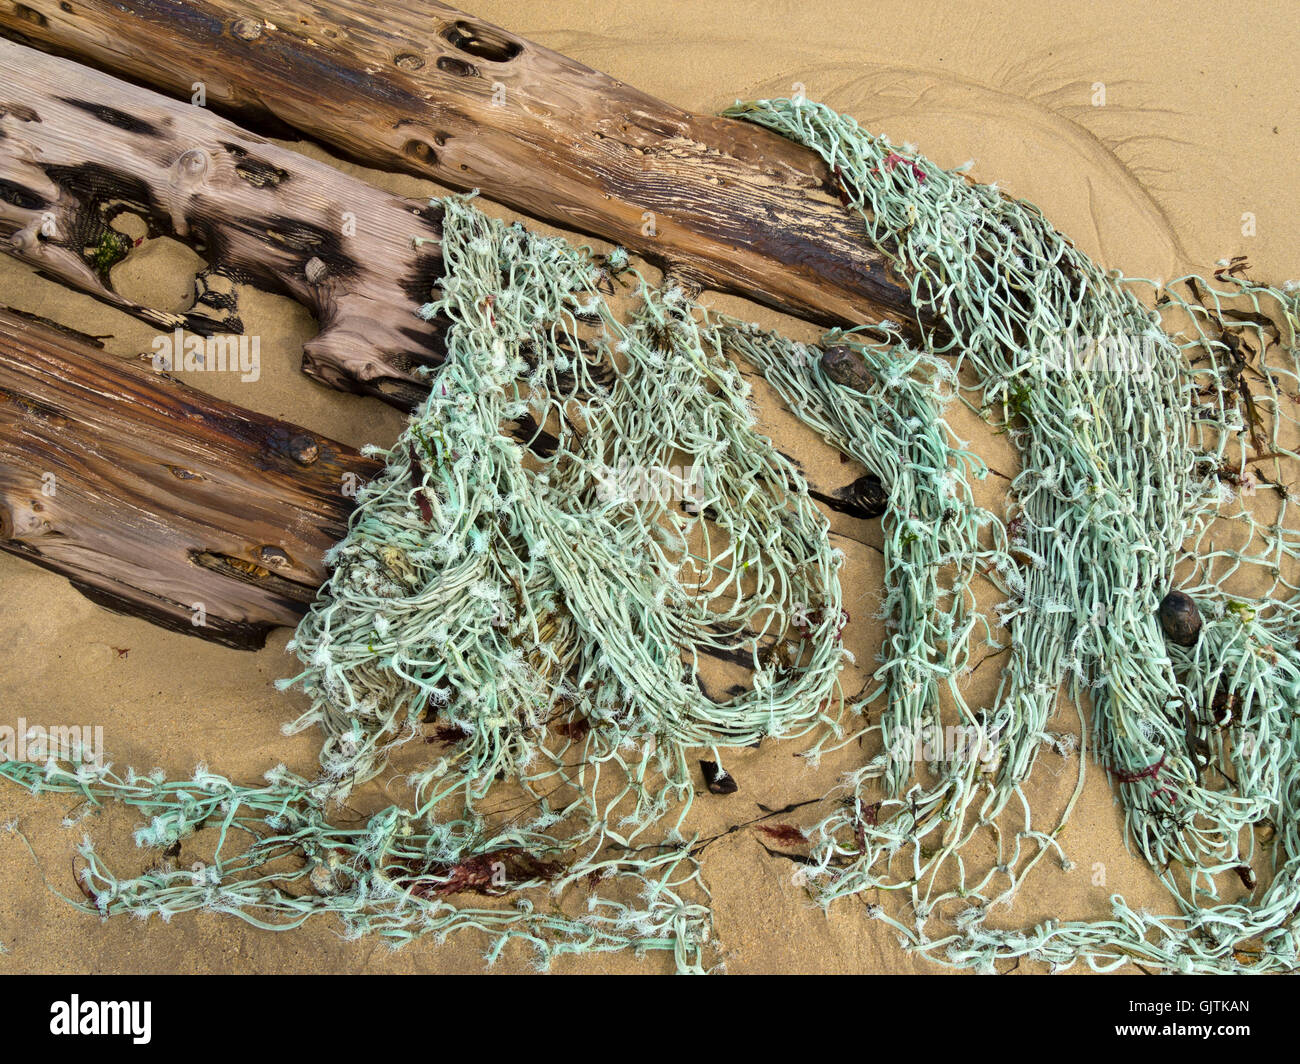 Shipwreck driftwood and old fishing net buried in sand, Balnahard Beach, Isle of Colonsay, Scotland, UK. Stock Photo